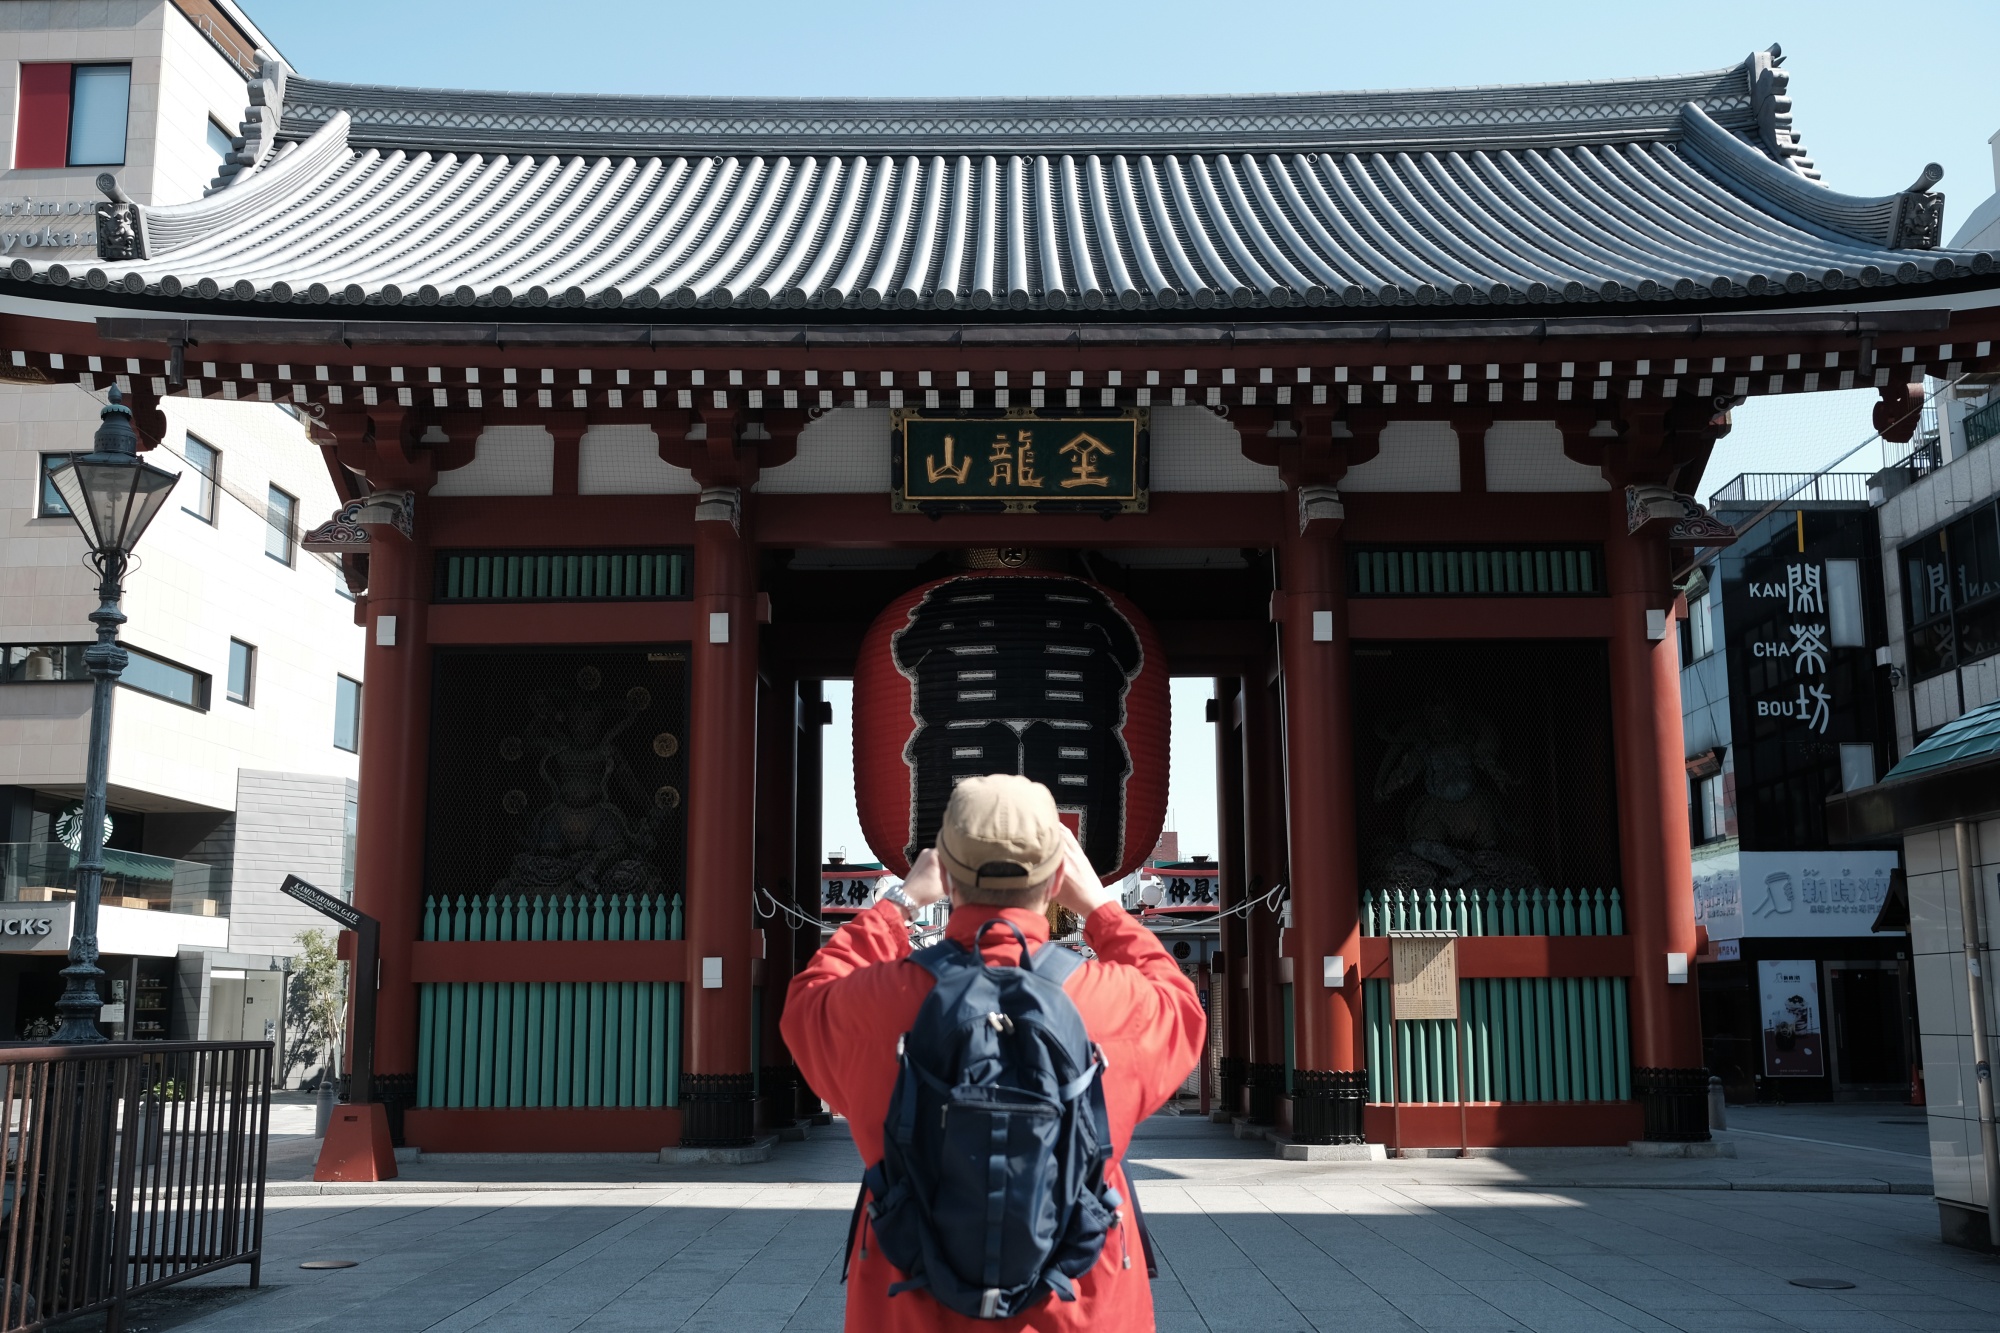 A person takes a photograph of a Kaminarimon gate near the Sensoji temple in the Asakusa district of Tokyo, on April 25.